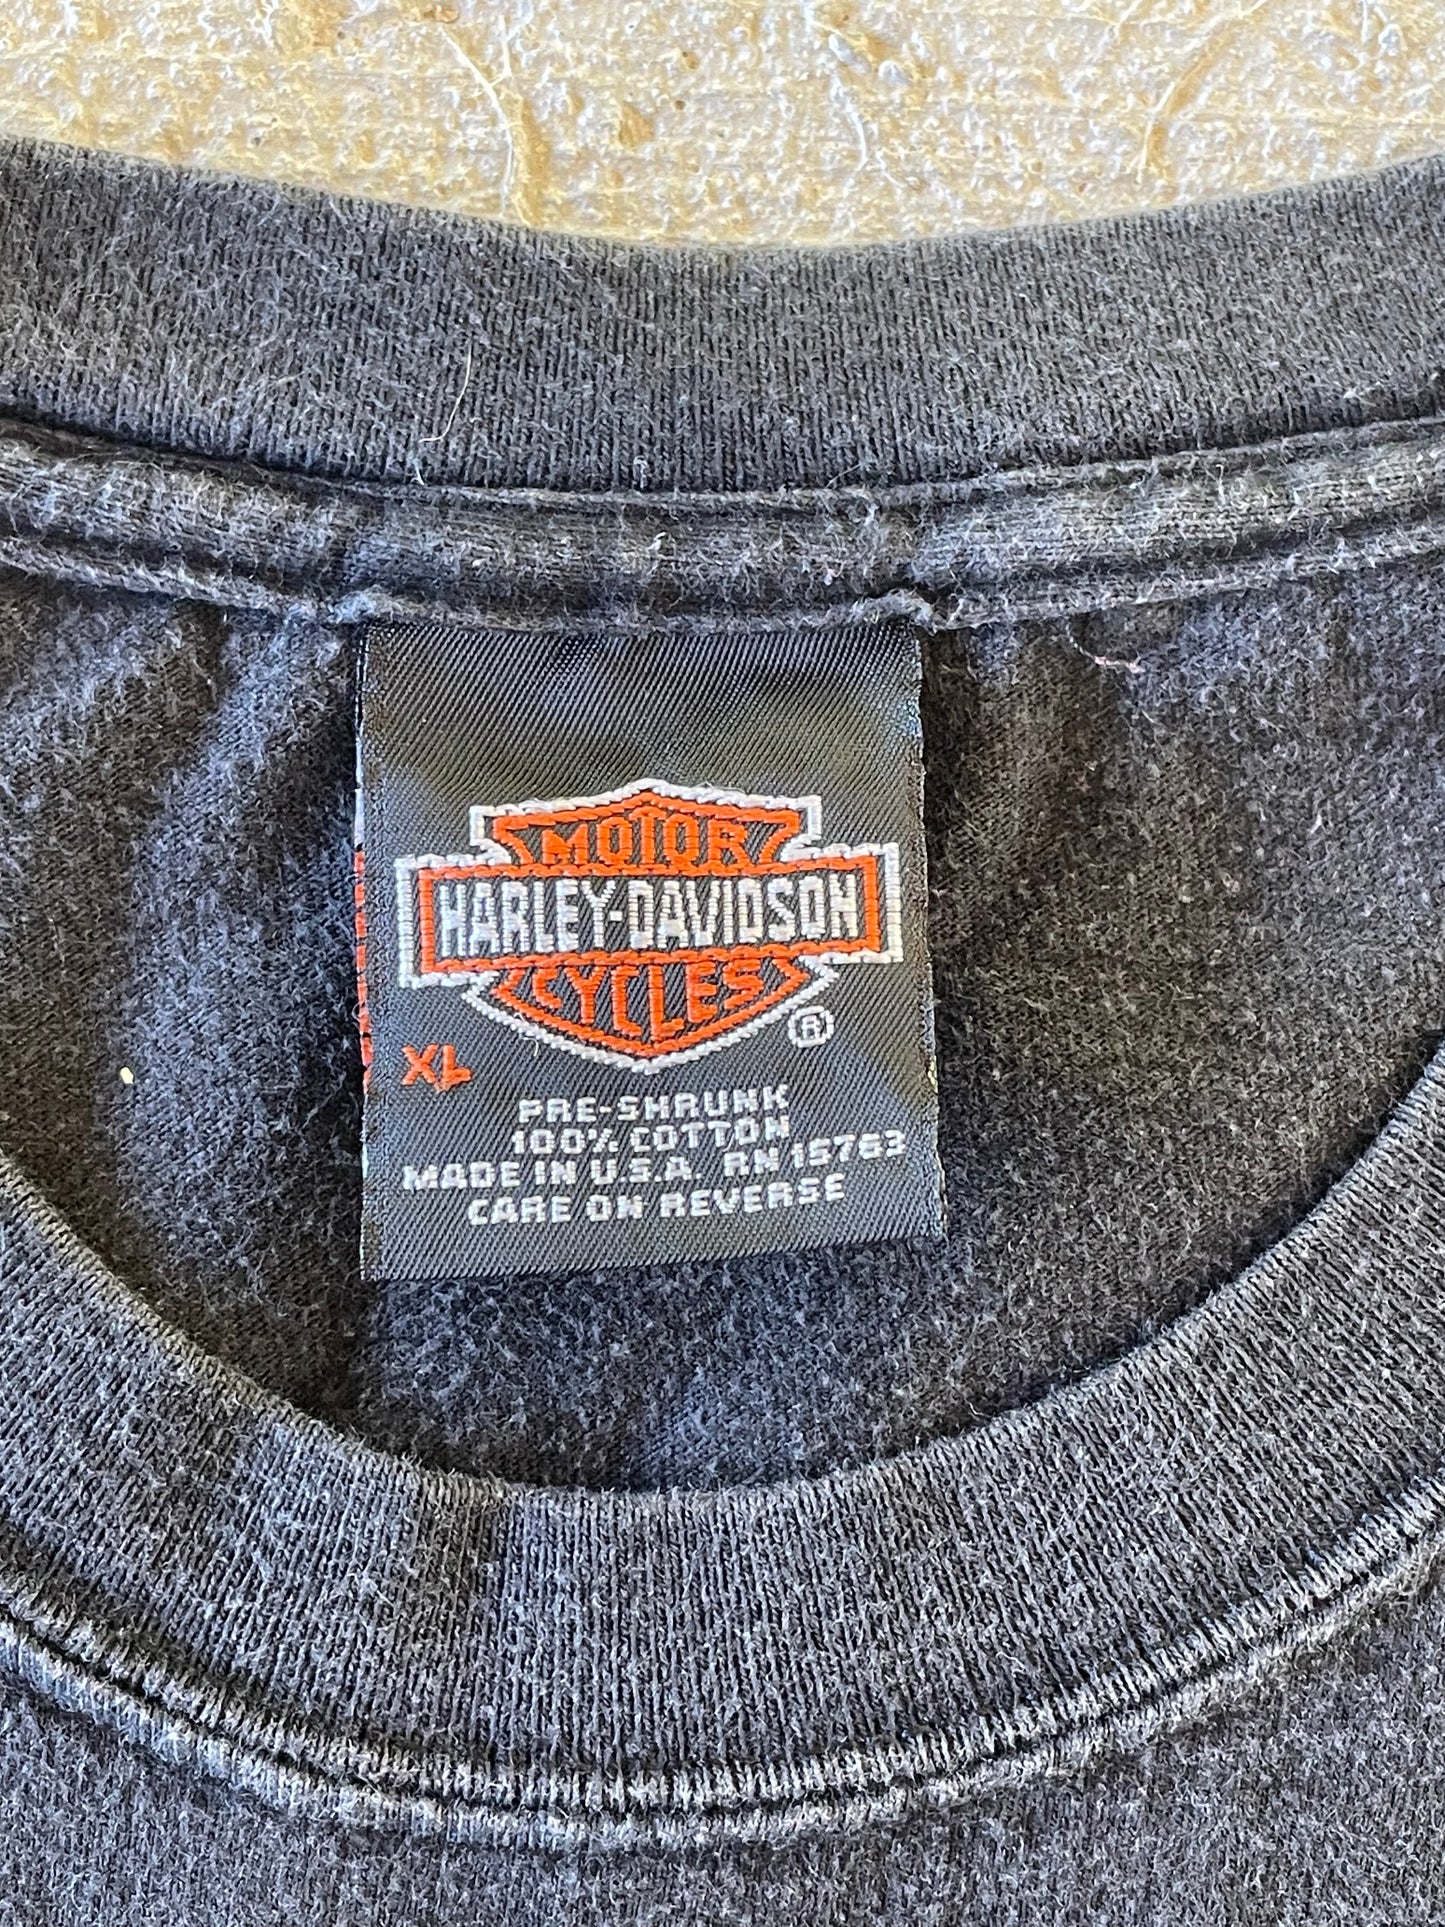 2001 Harley Davidson NYC Tee